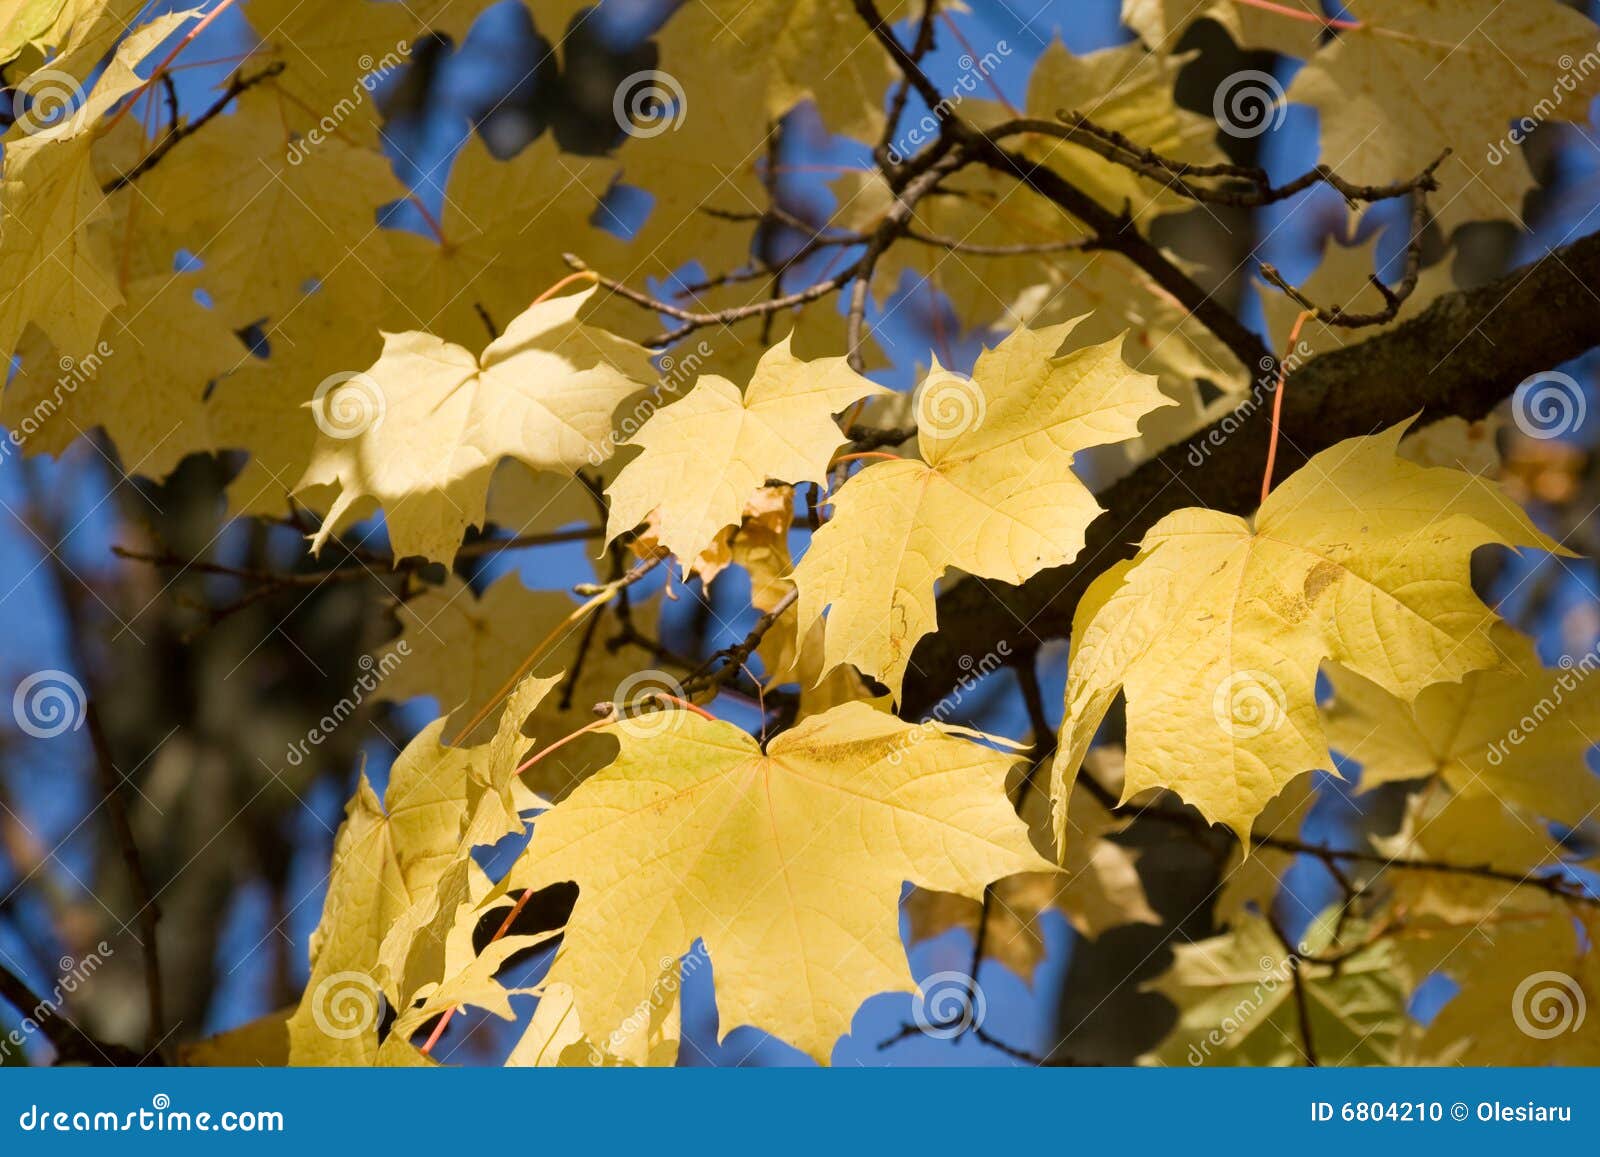 maple foliage in november